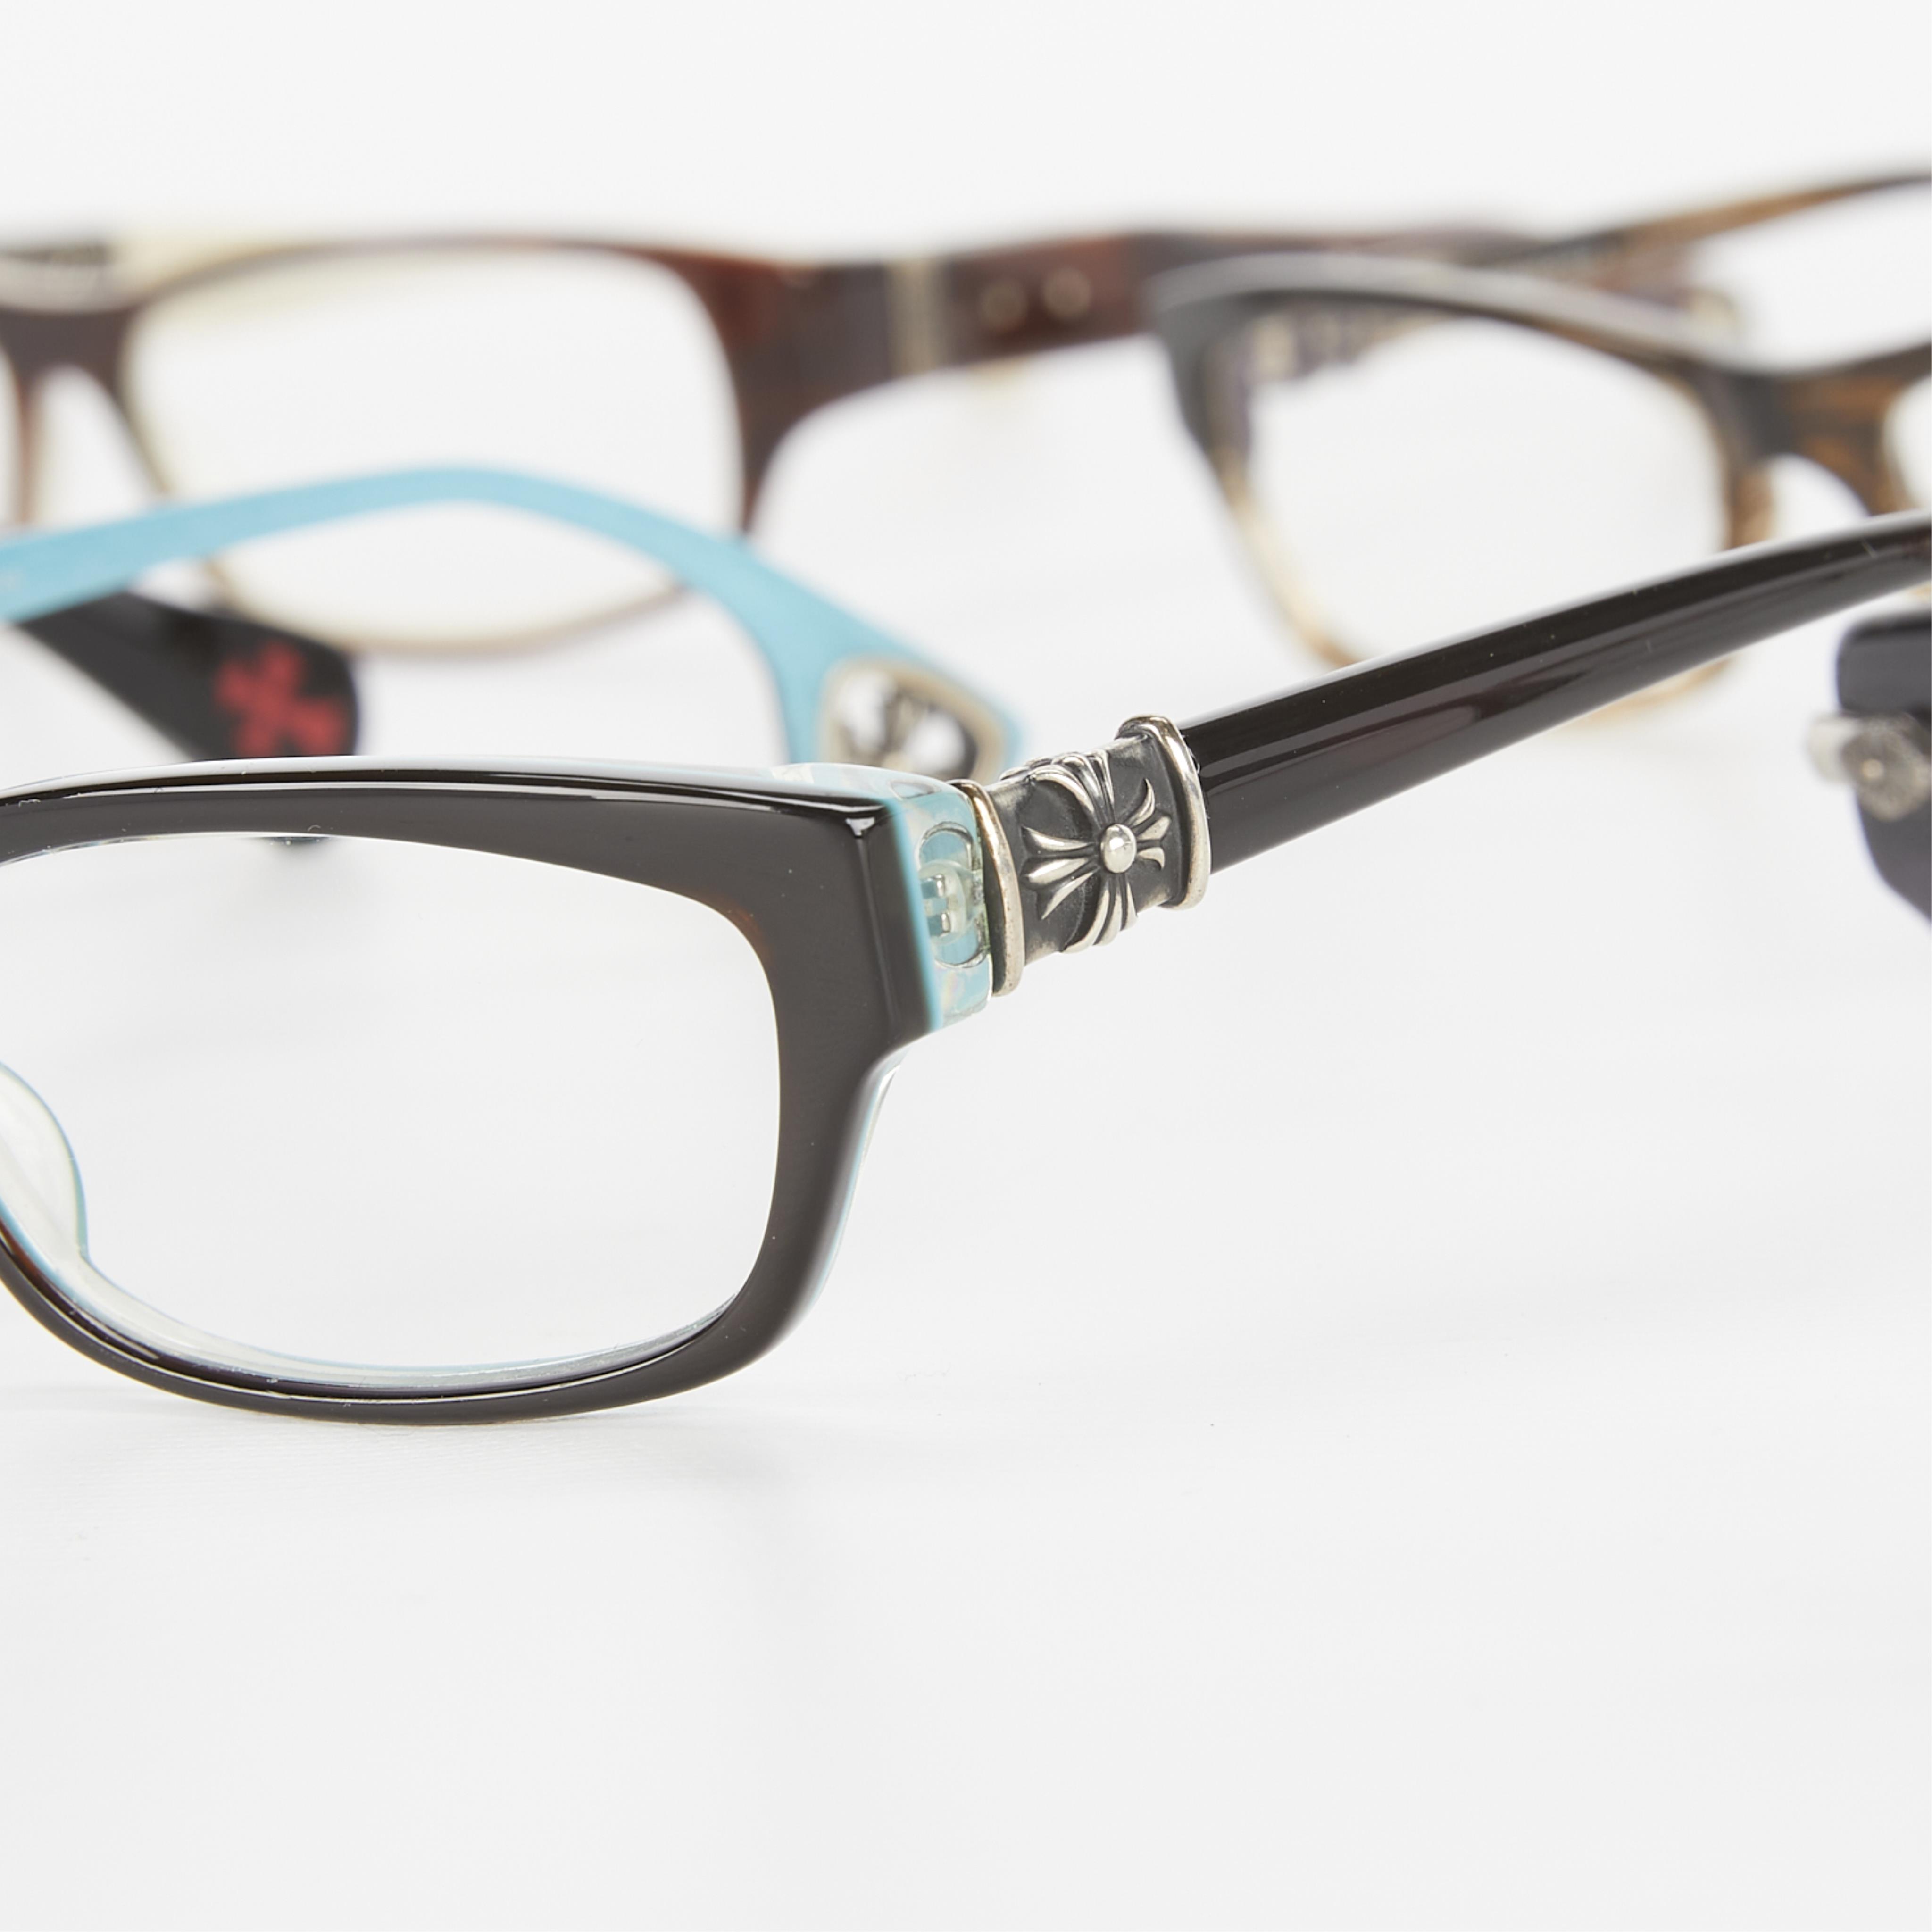 Grp of 6 Chrome Hearts Eyeglasses - Image 2 of 12